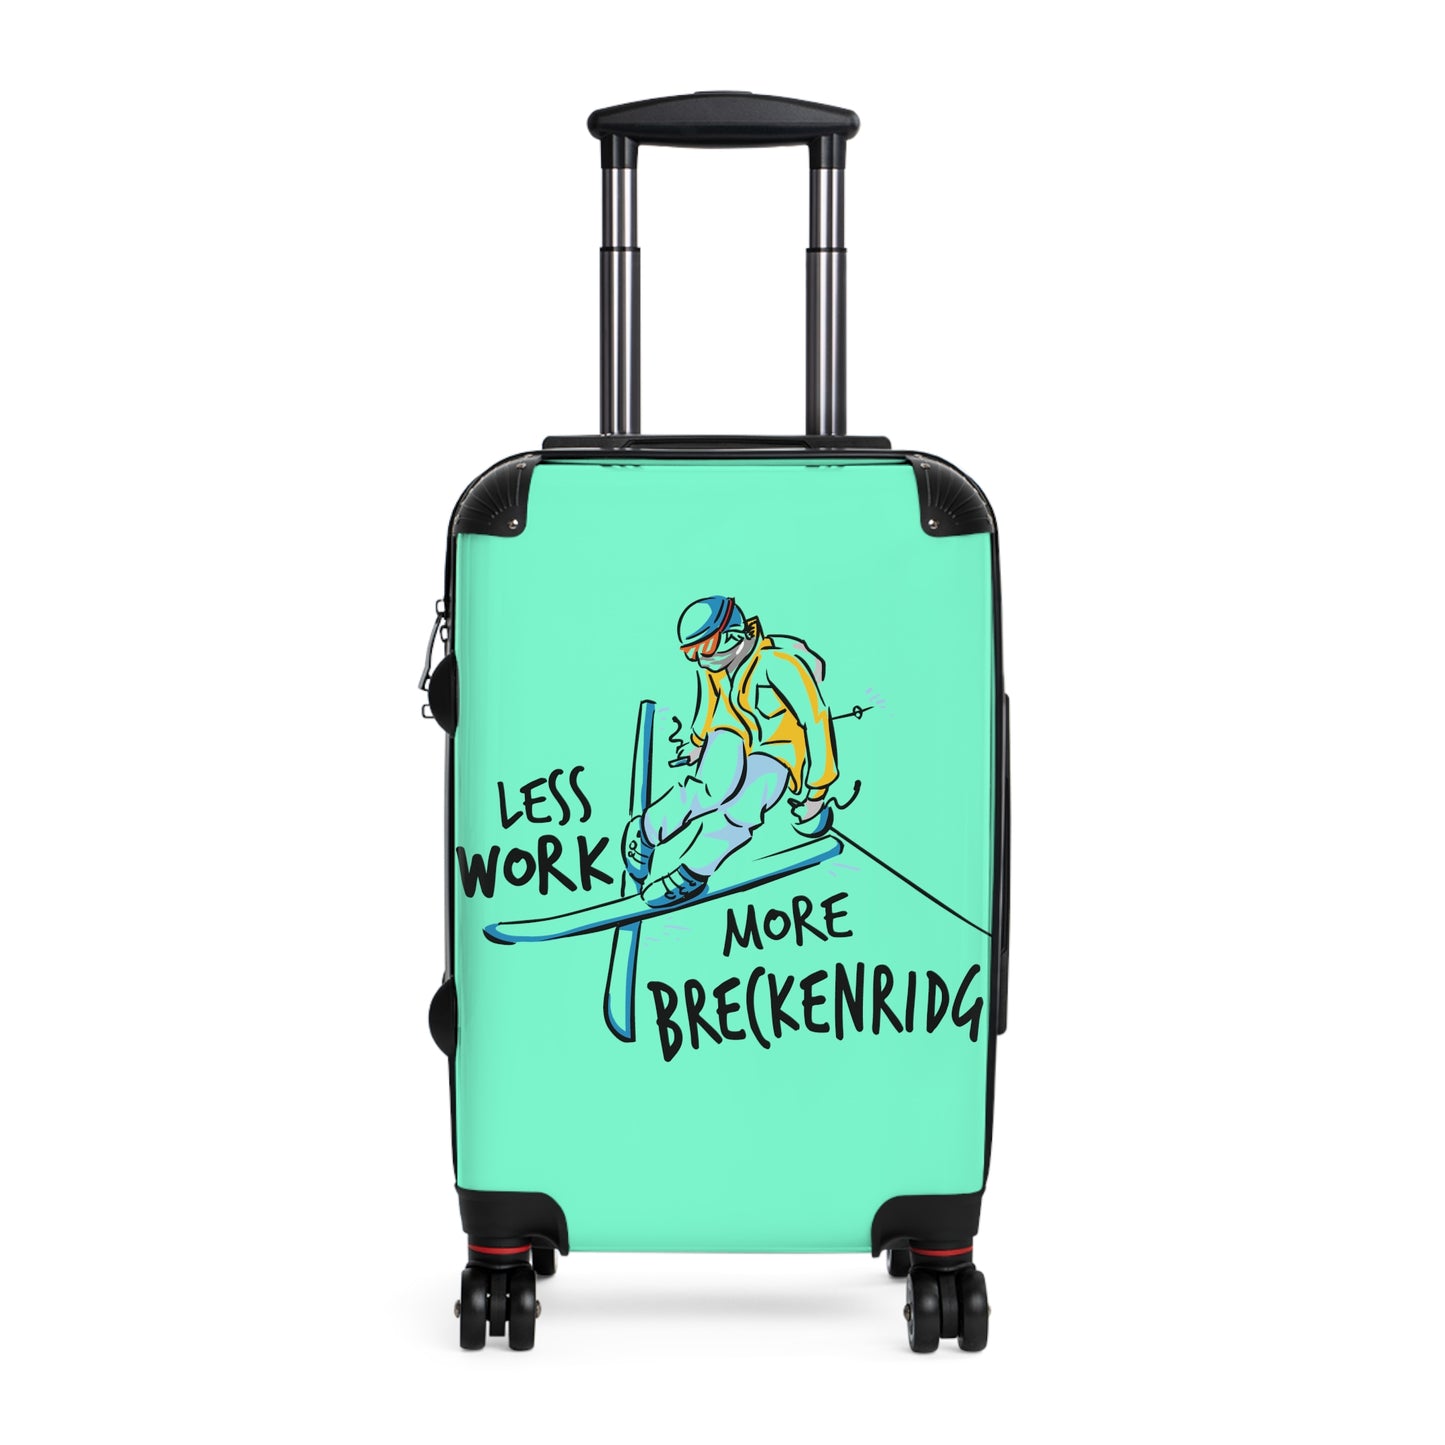 Less Work More Breckenridge Custom Luggage